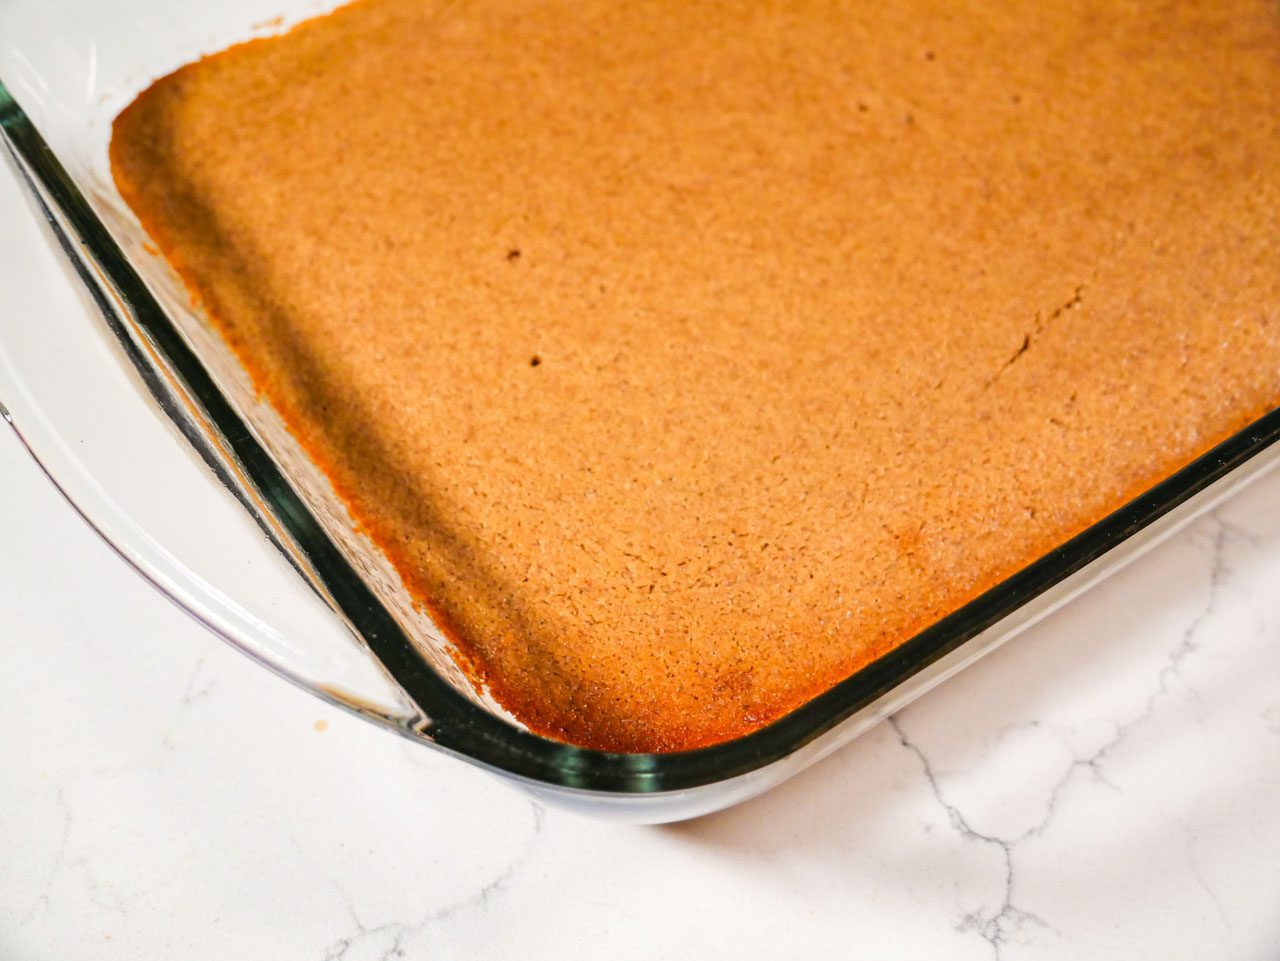 Gingerbread cake in a baking pan